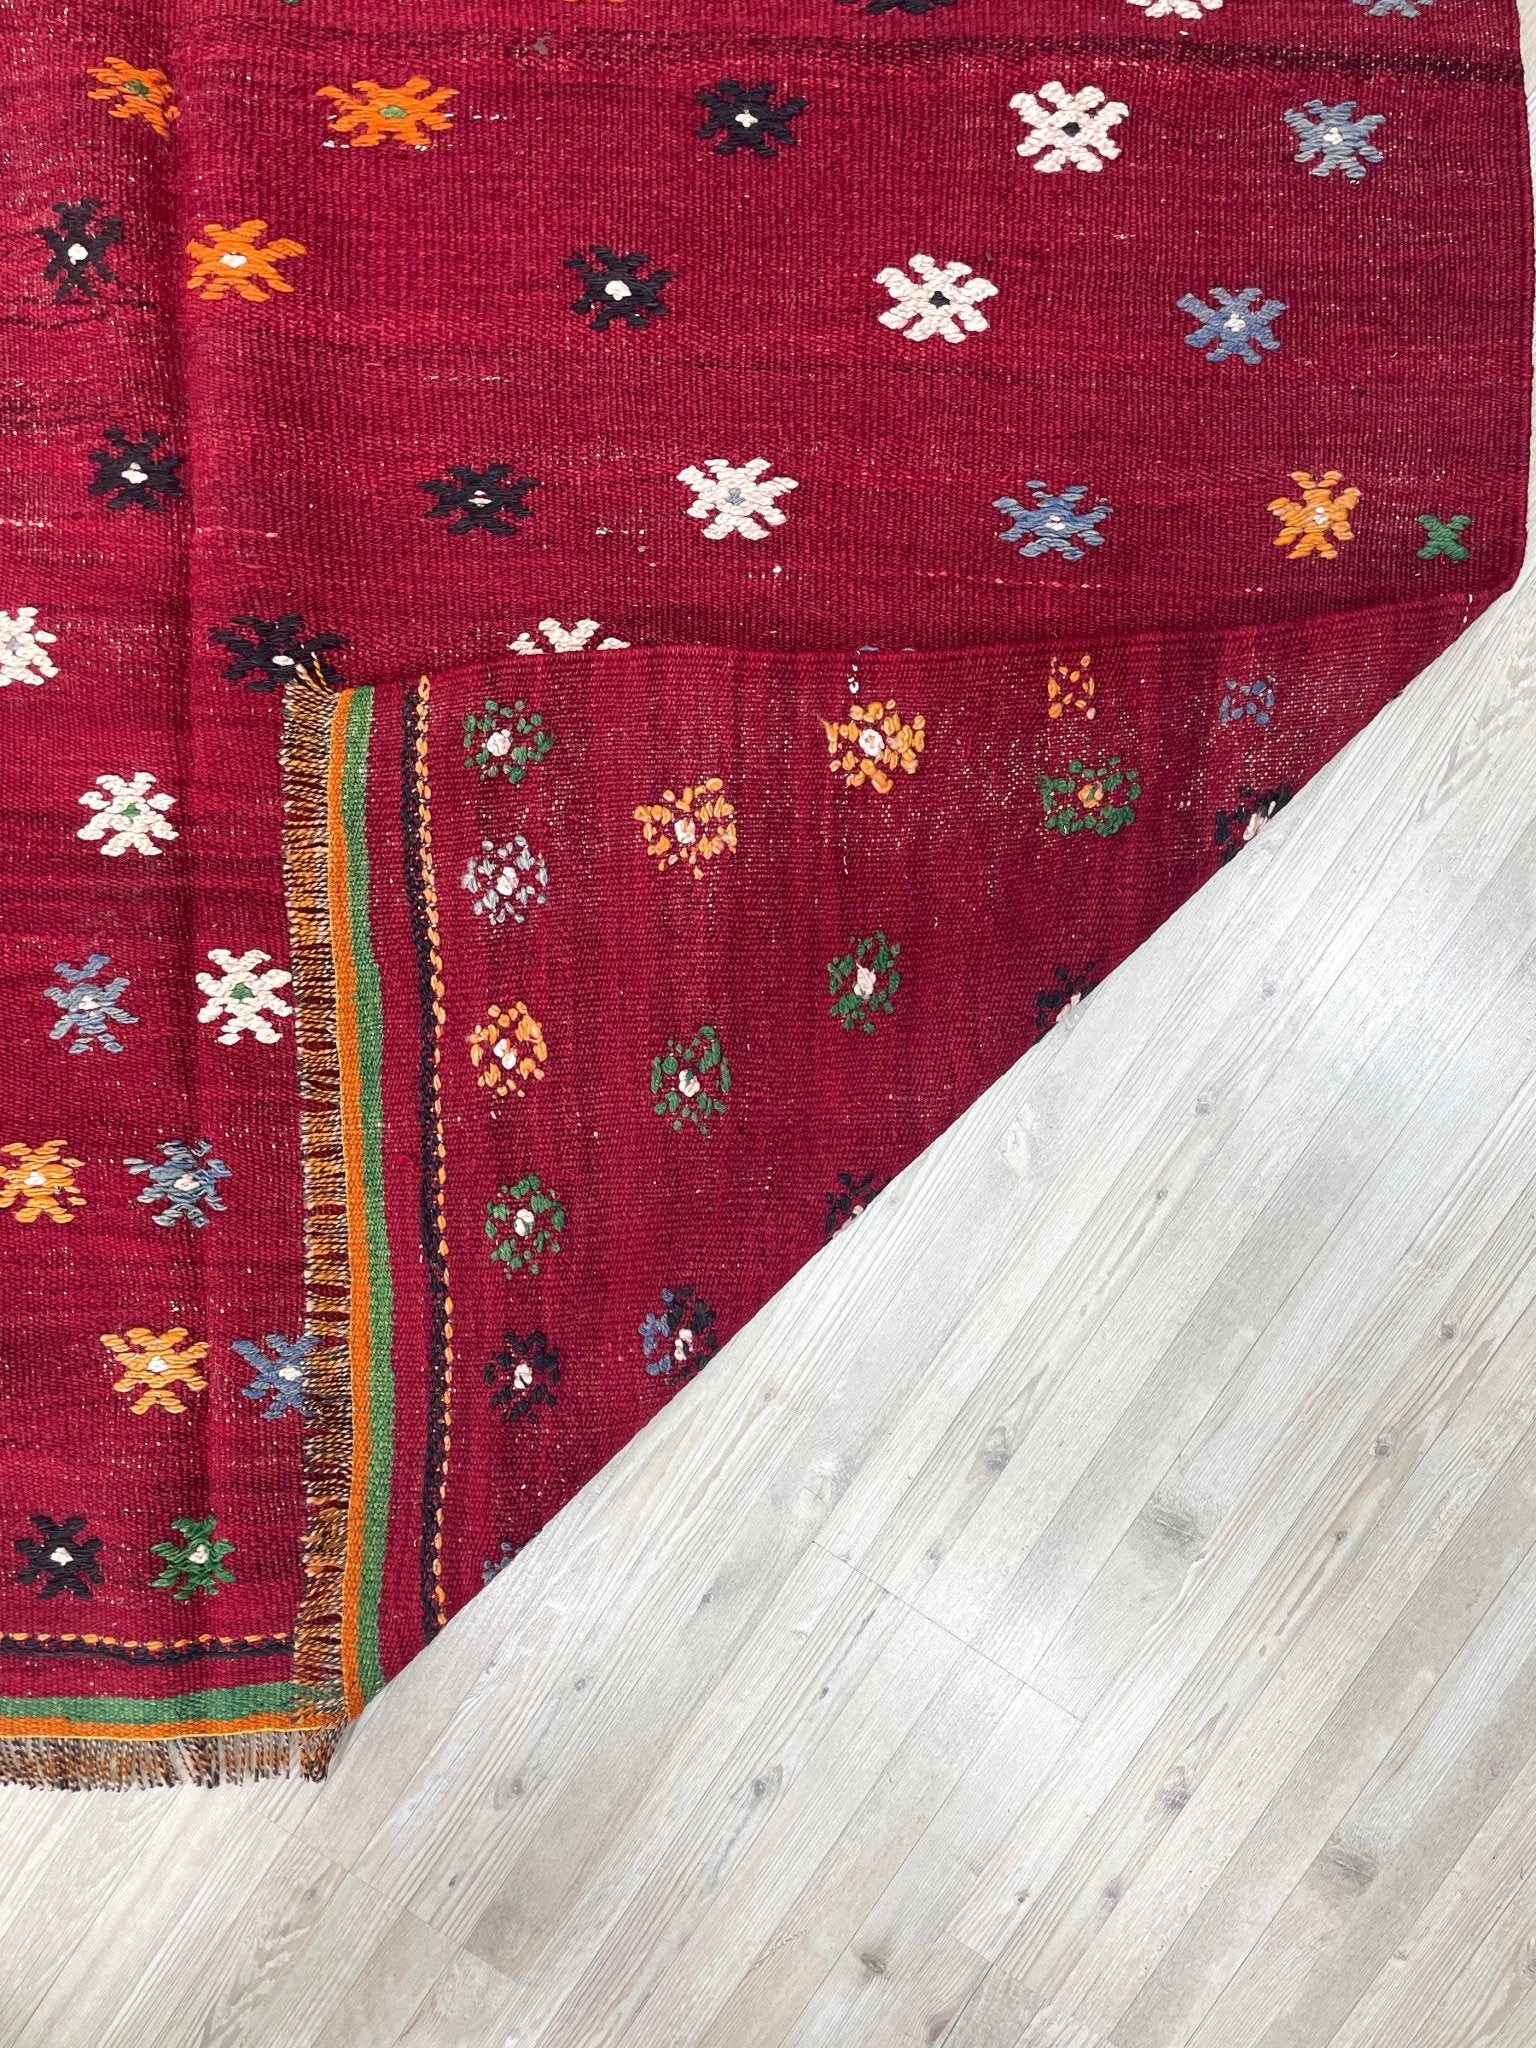 pergamum turkish kilim rug shop san francisco bay area berkeley palo alto buy rug online shopping